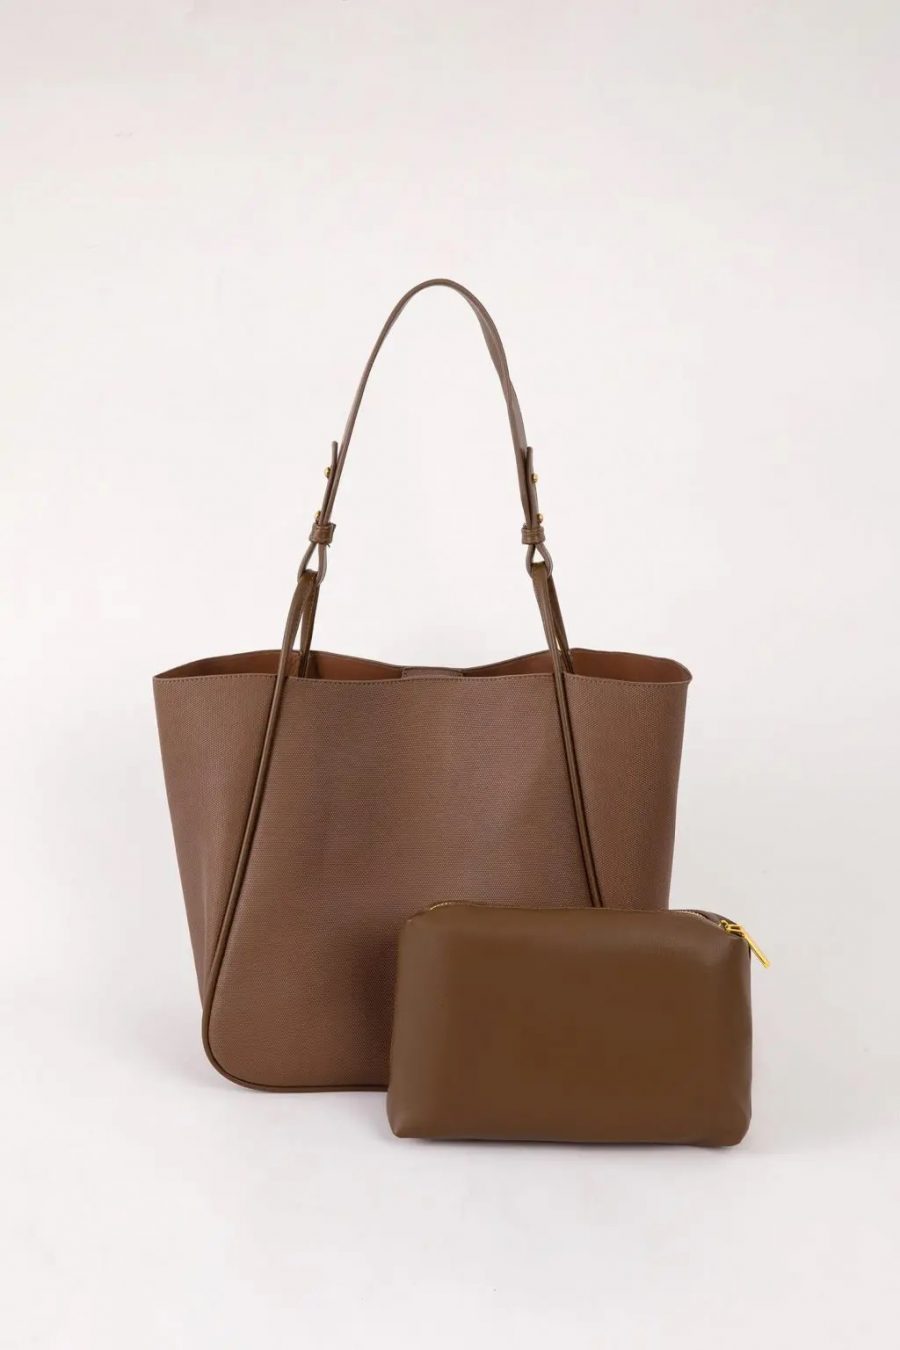 female bags online singapore 1024x1536 1